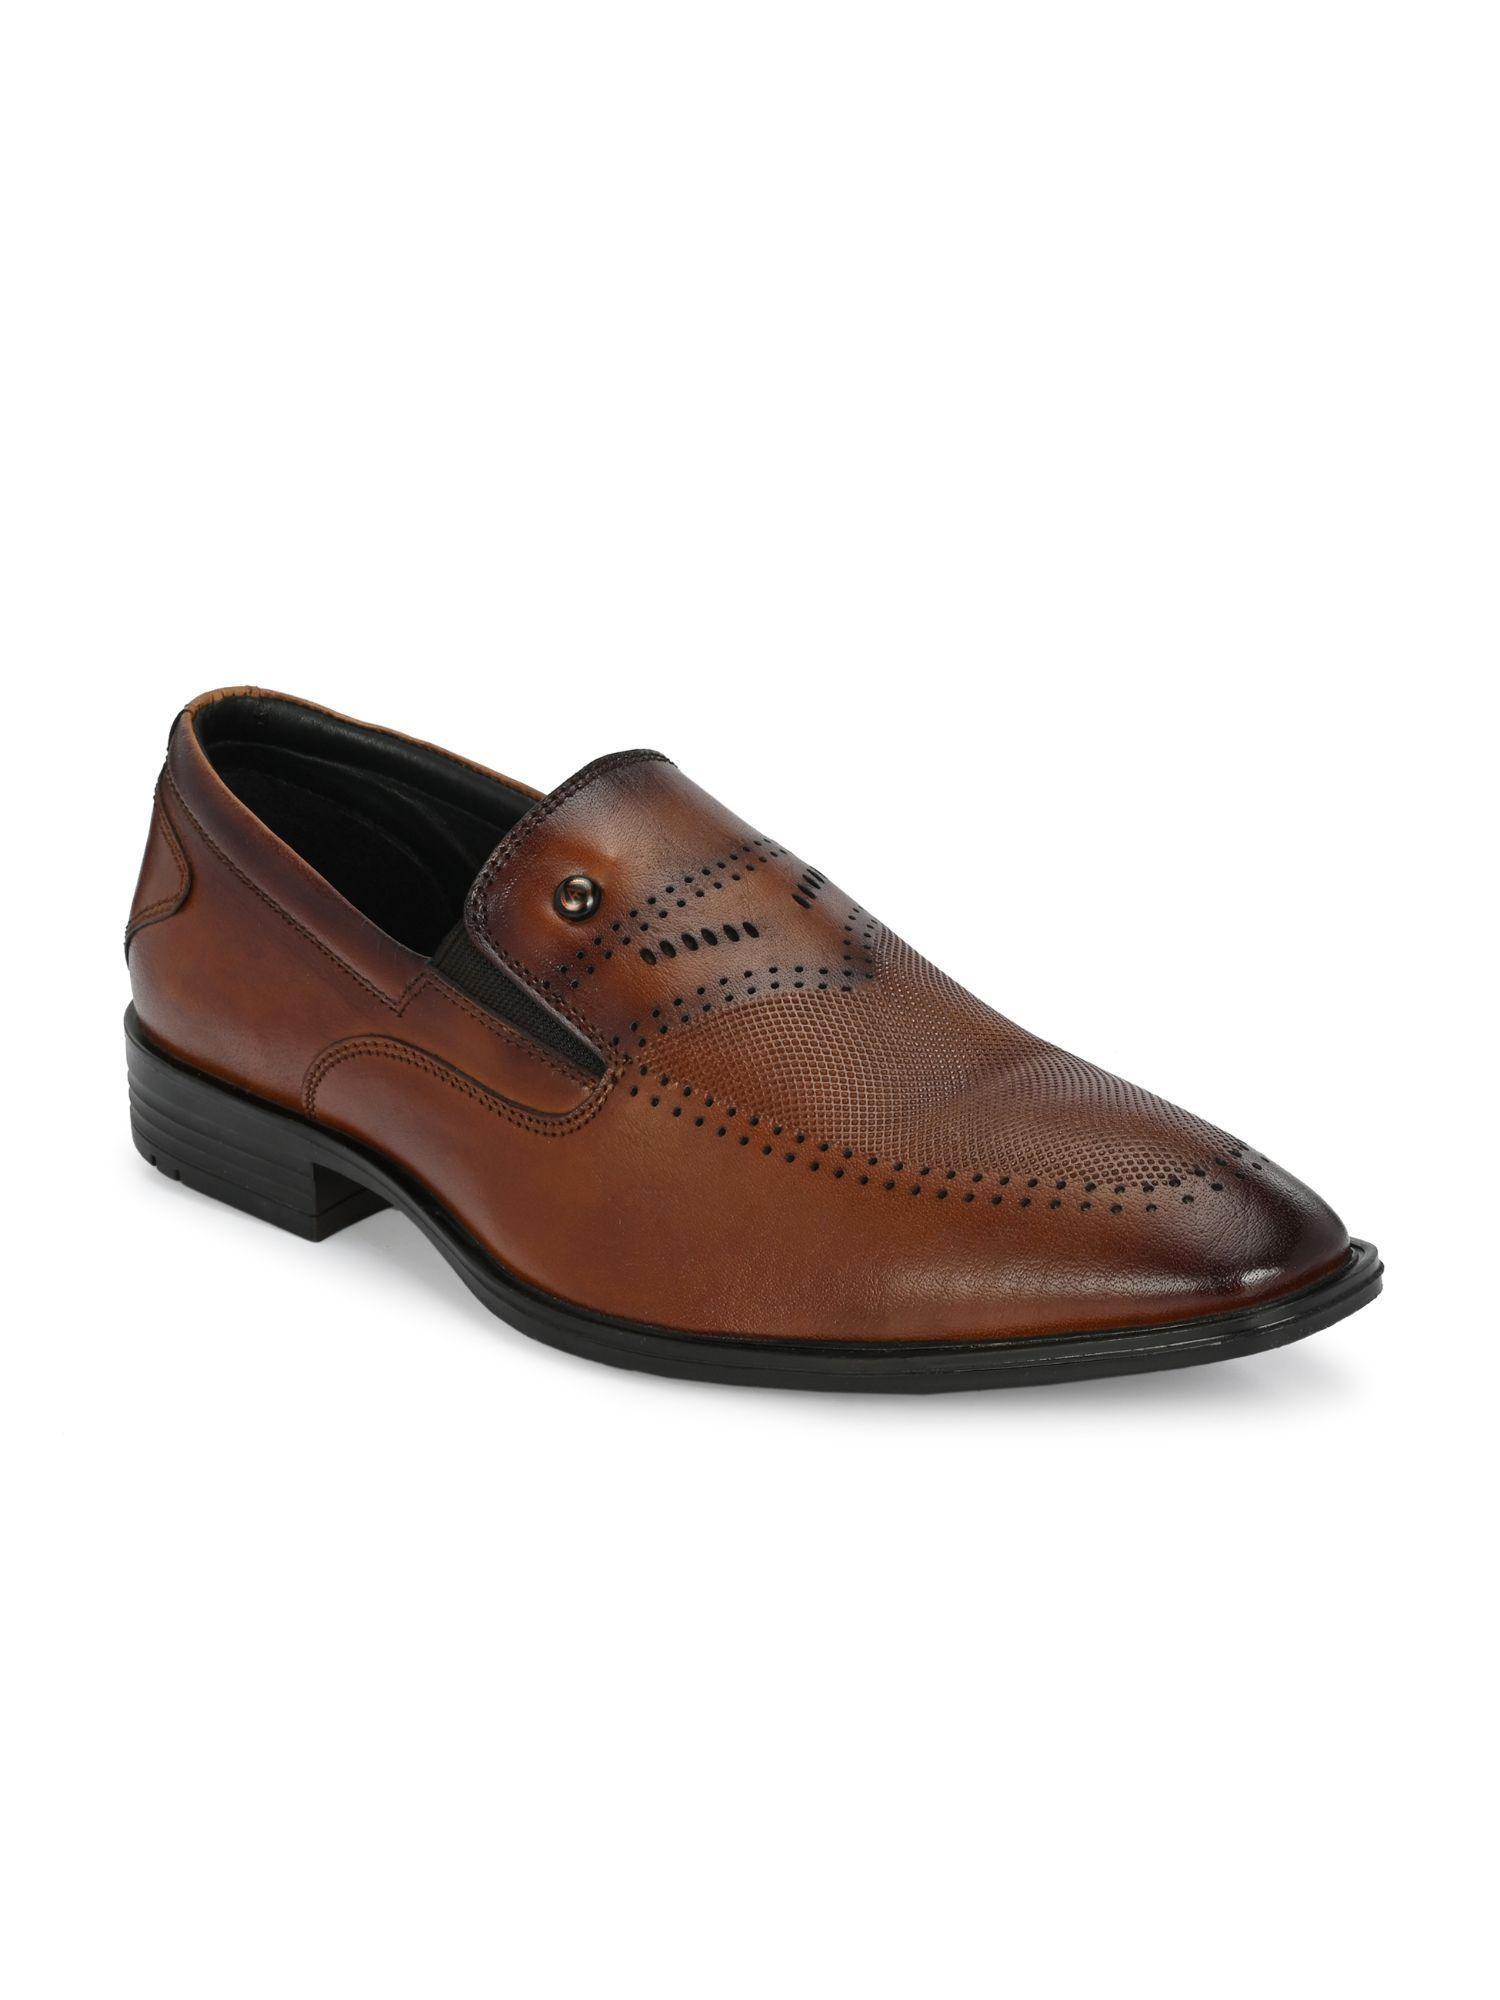 textured-tan-formal-slip-on-shoes-for-men